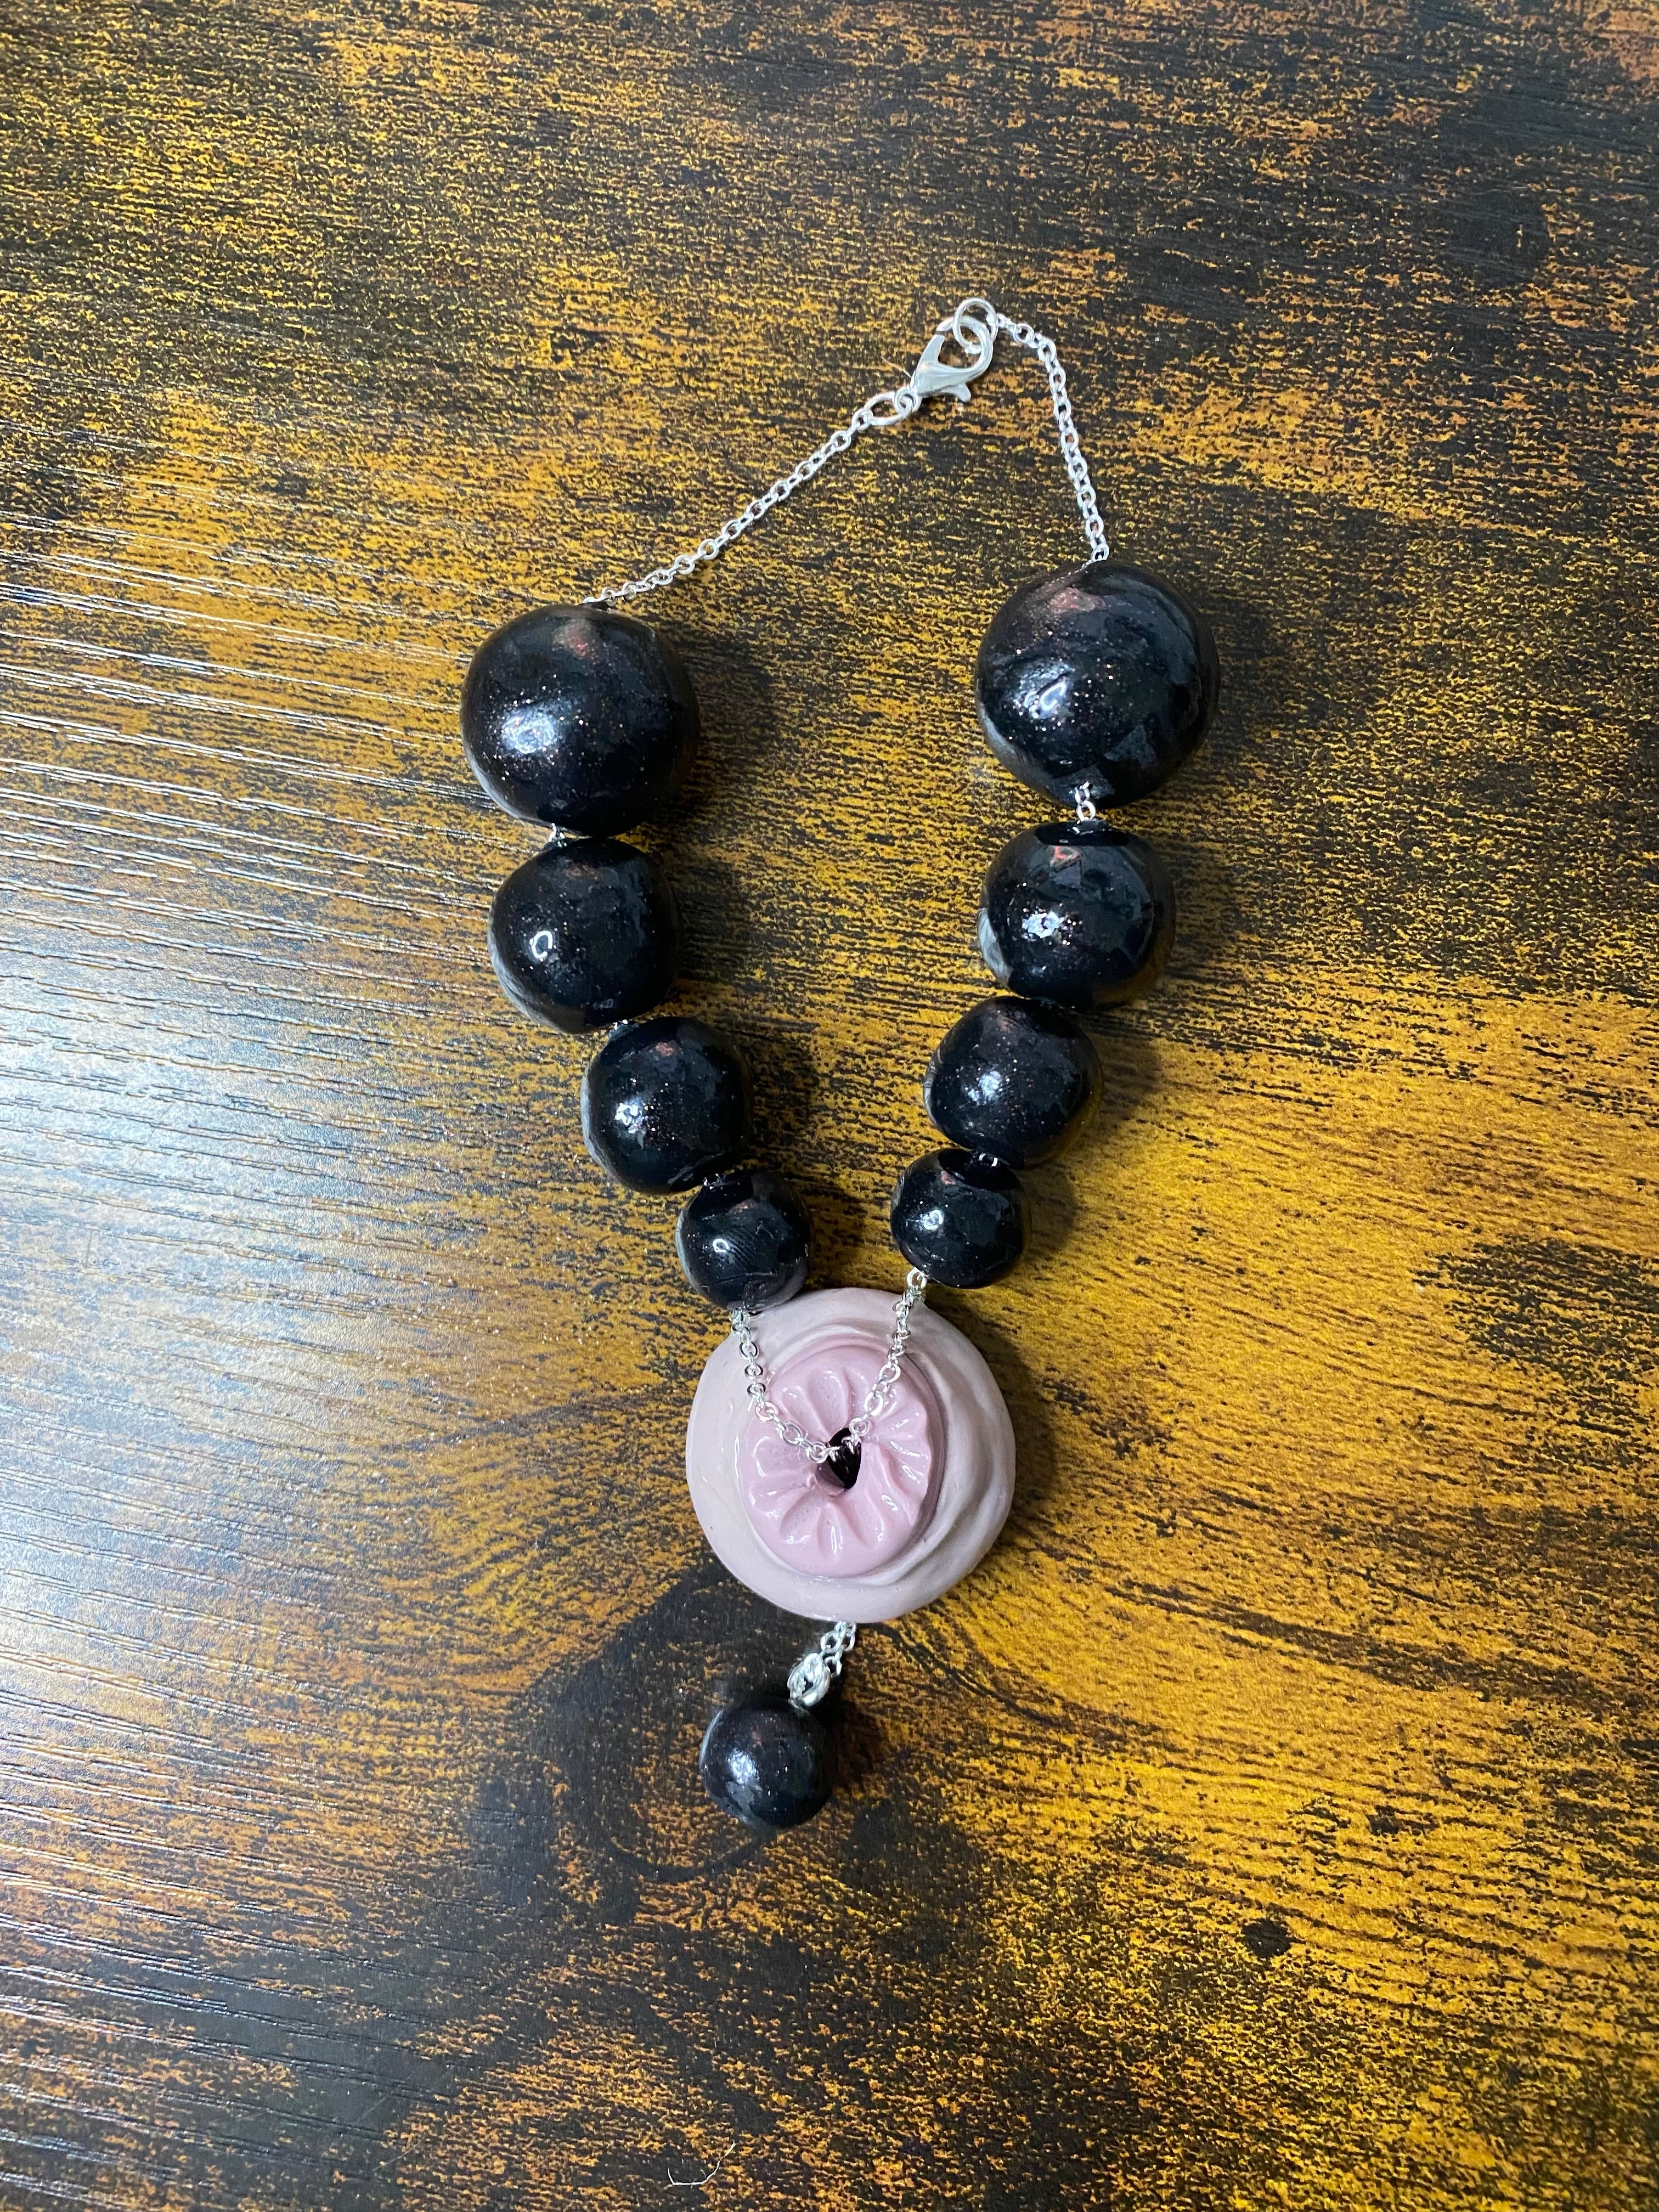 charlene lucero share home made anal beads photos